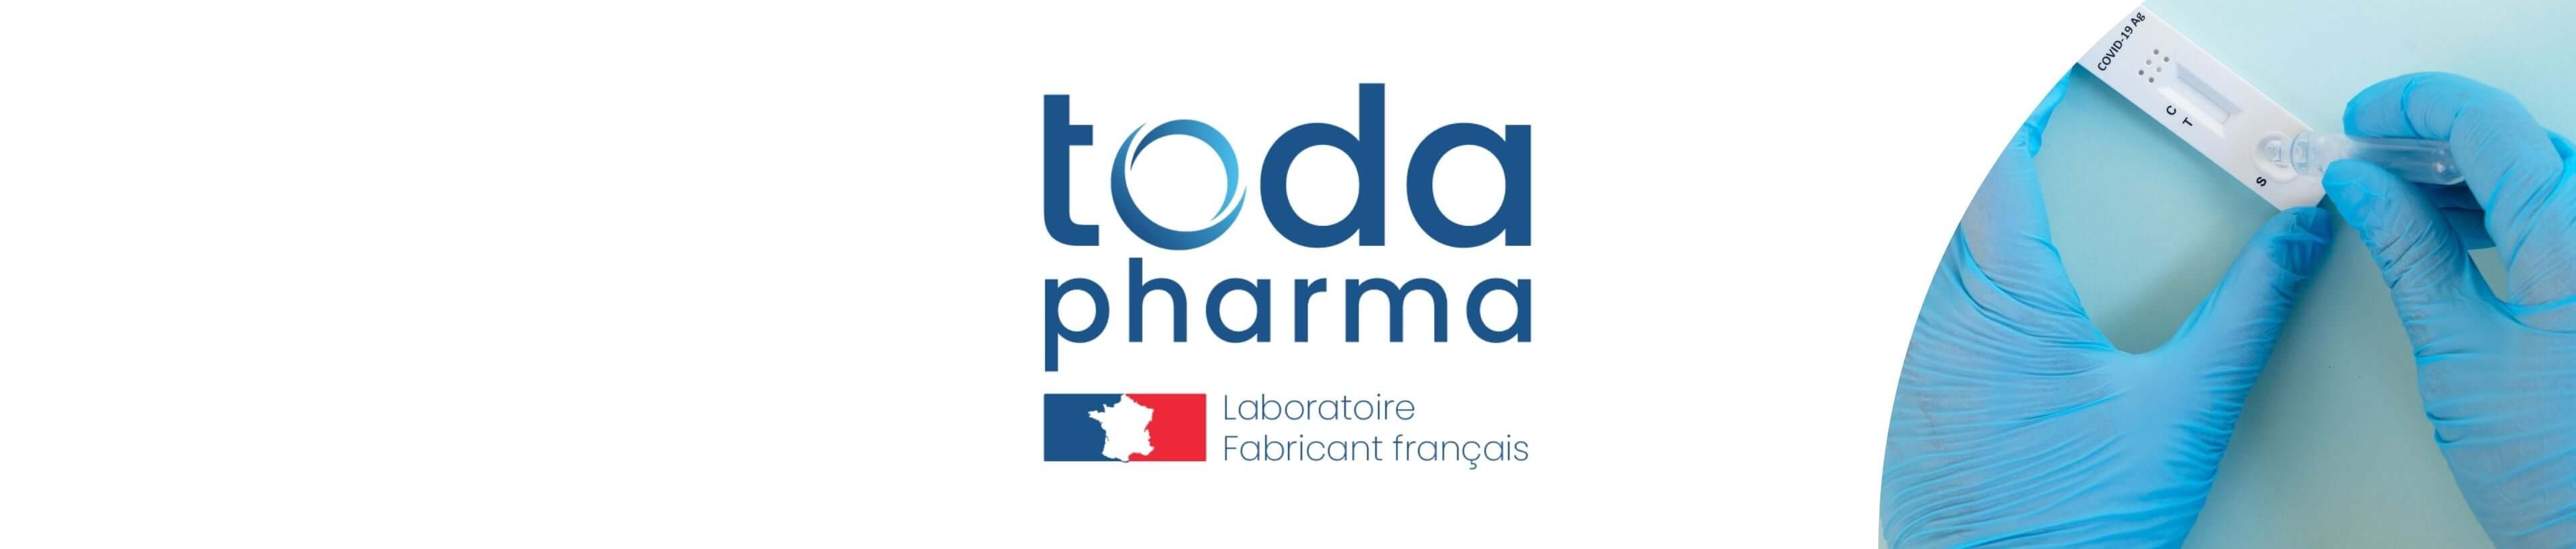 Bannière Toda Pharma test salivaire urinaire drogue